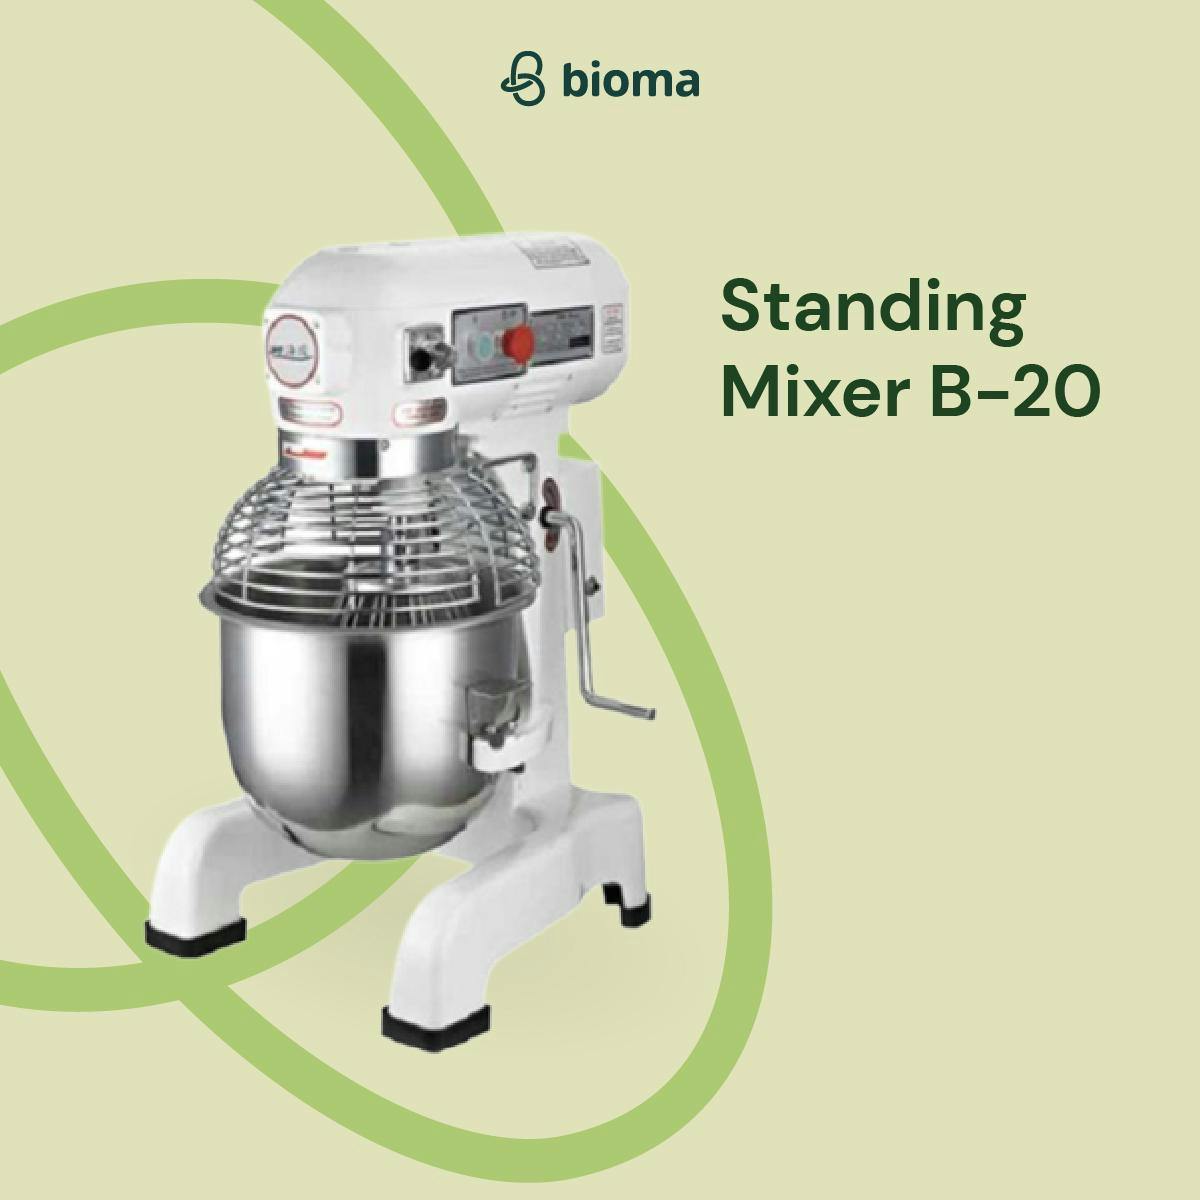 Standing Mixer B-20